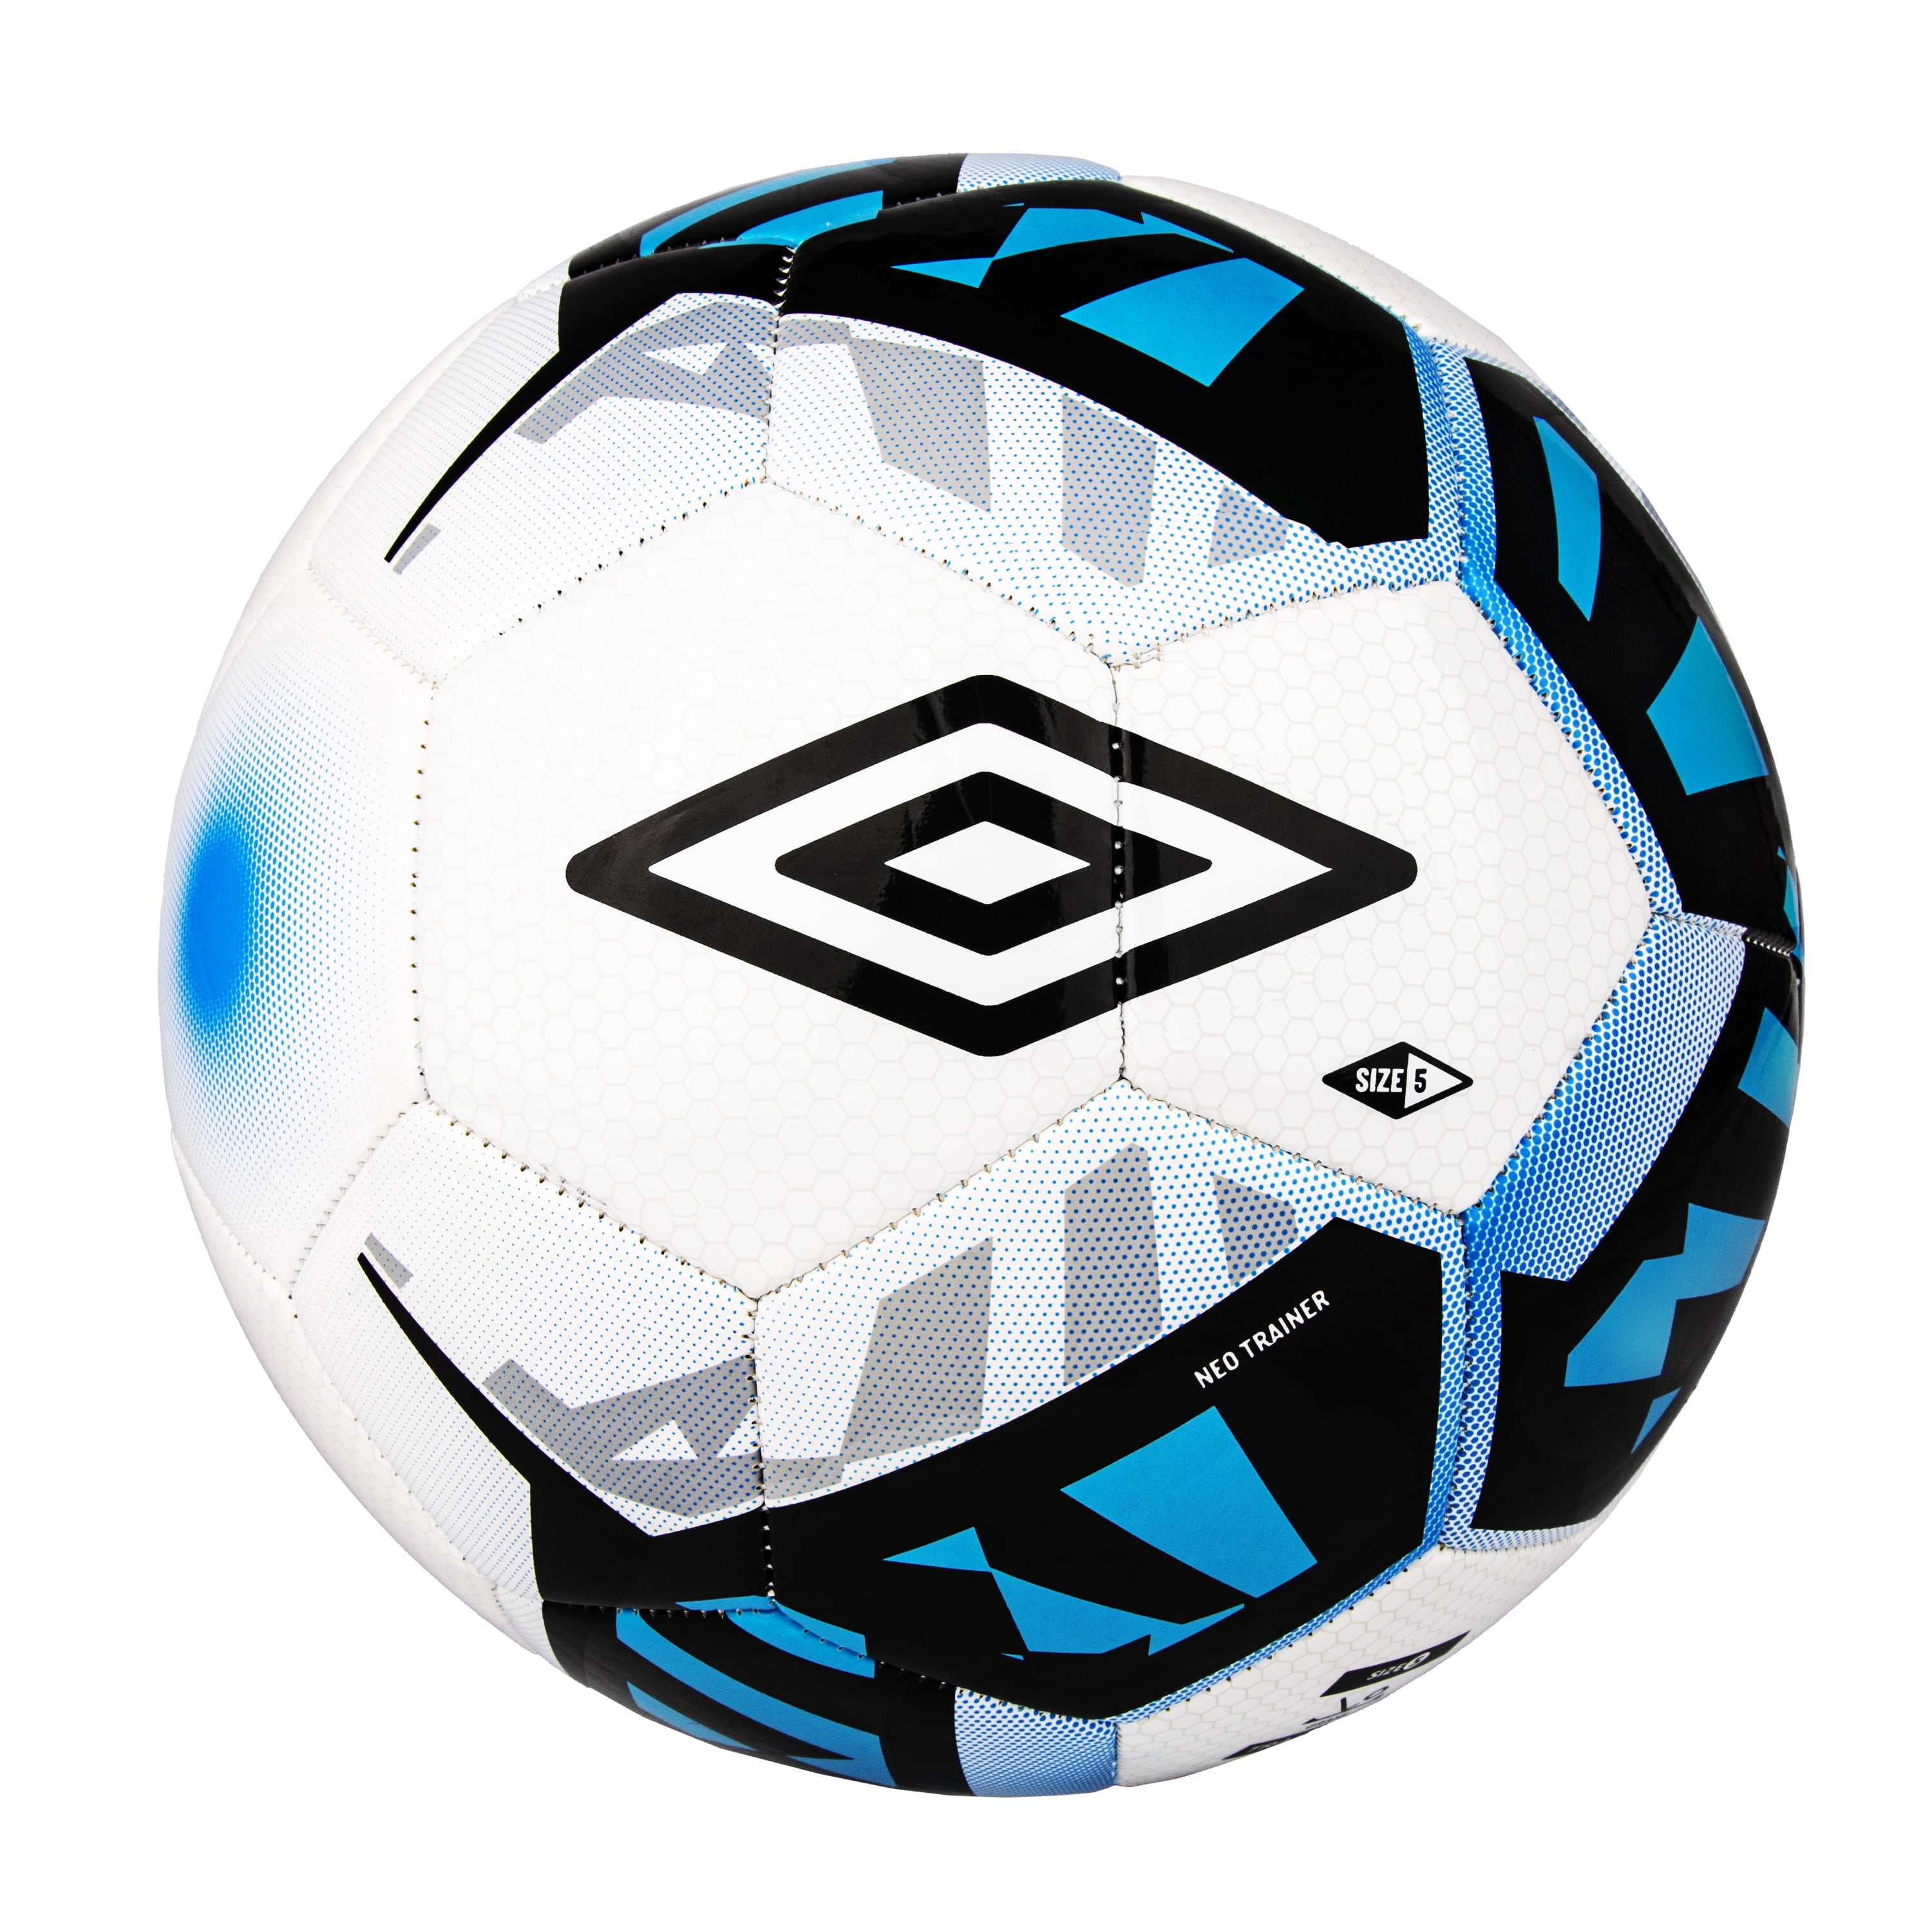 Umbro Neo Size 5 Soccer Ball for Kids 13 years+, Blue